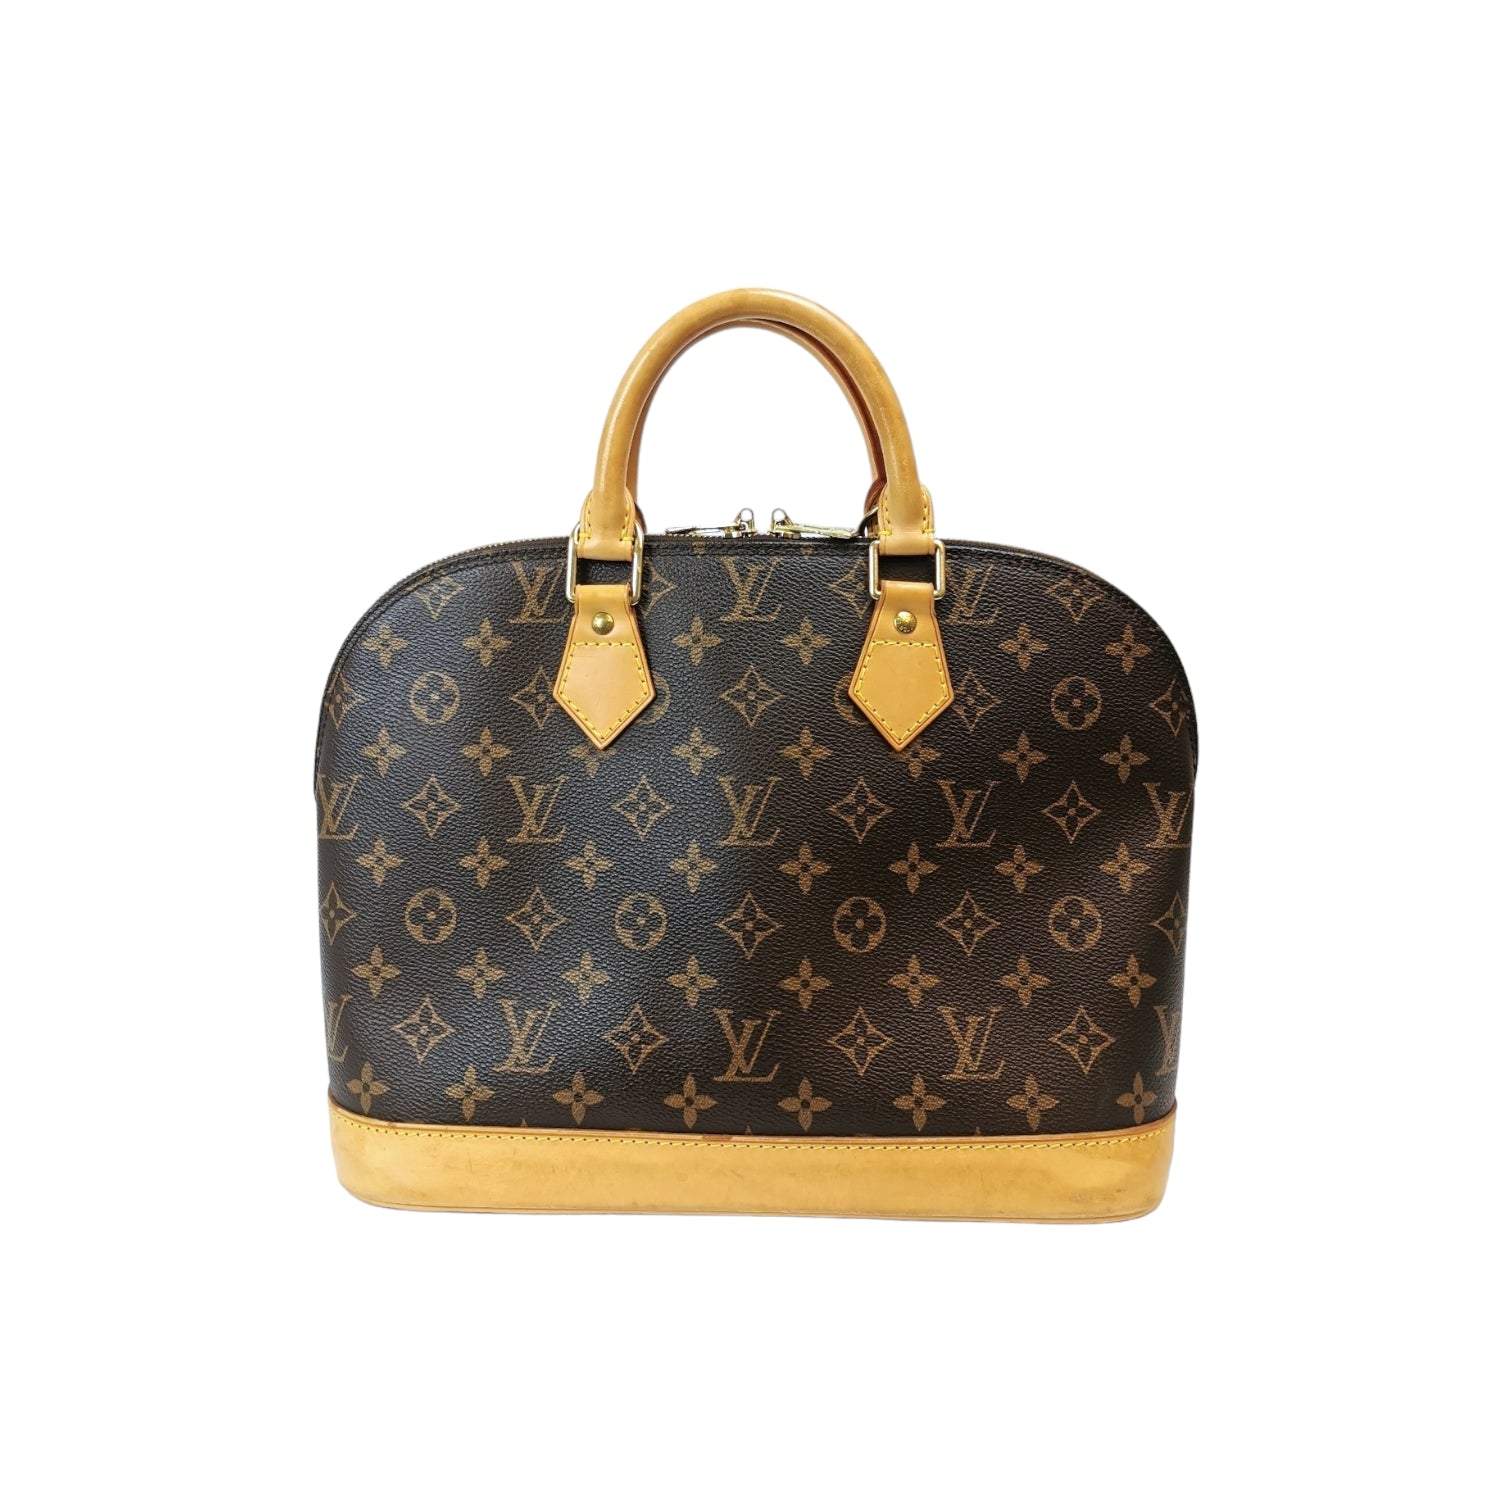 Louis Vuitton ALMA PM -VS- ALMA BB Comparison #handbags #almabb #alma  #louisvuitton #damierebene 